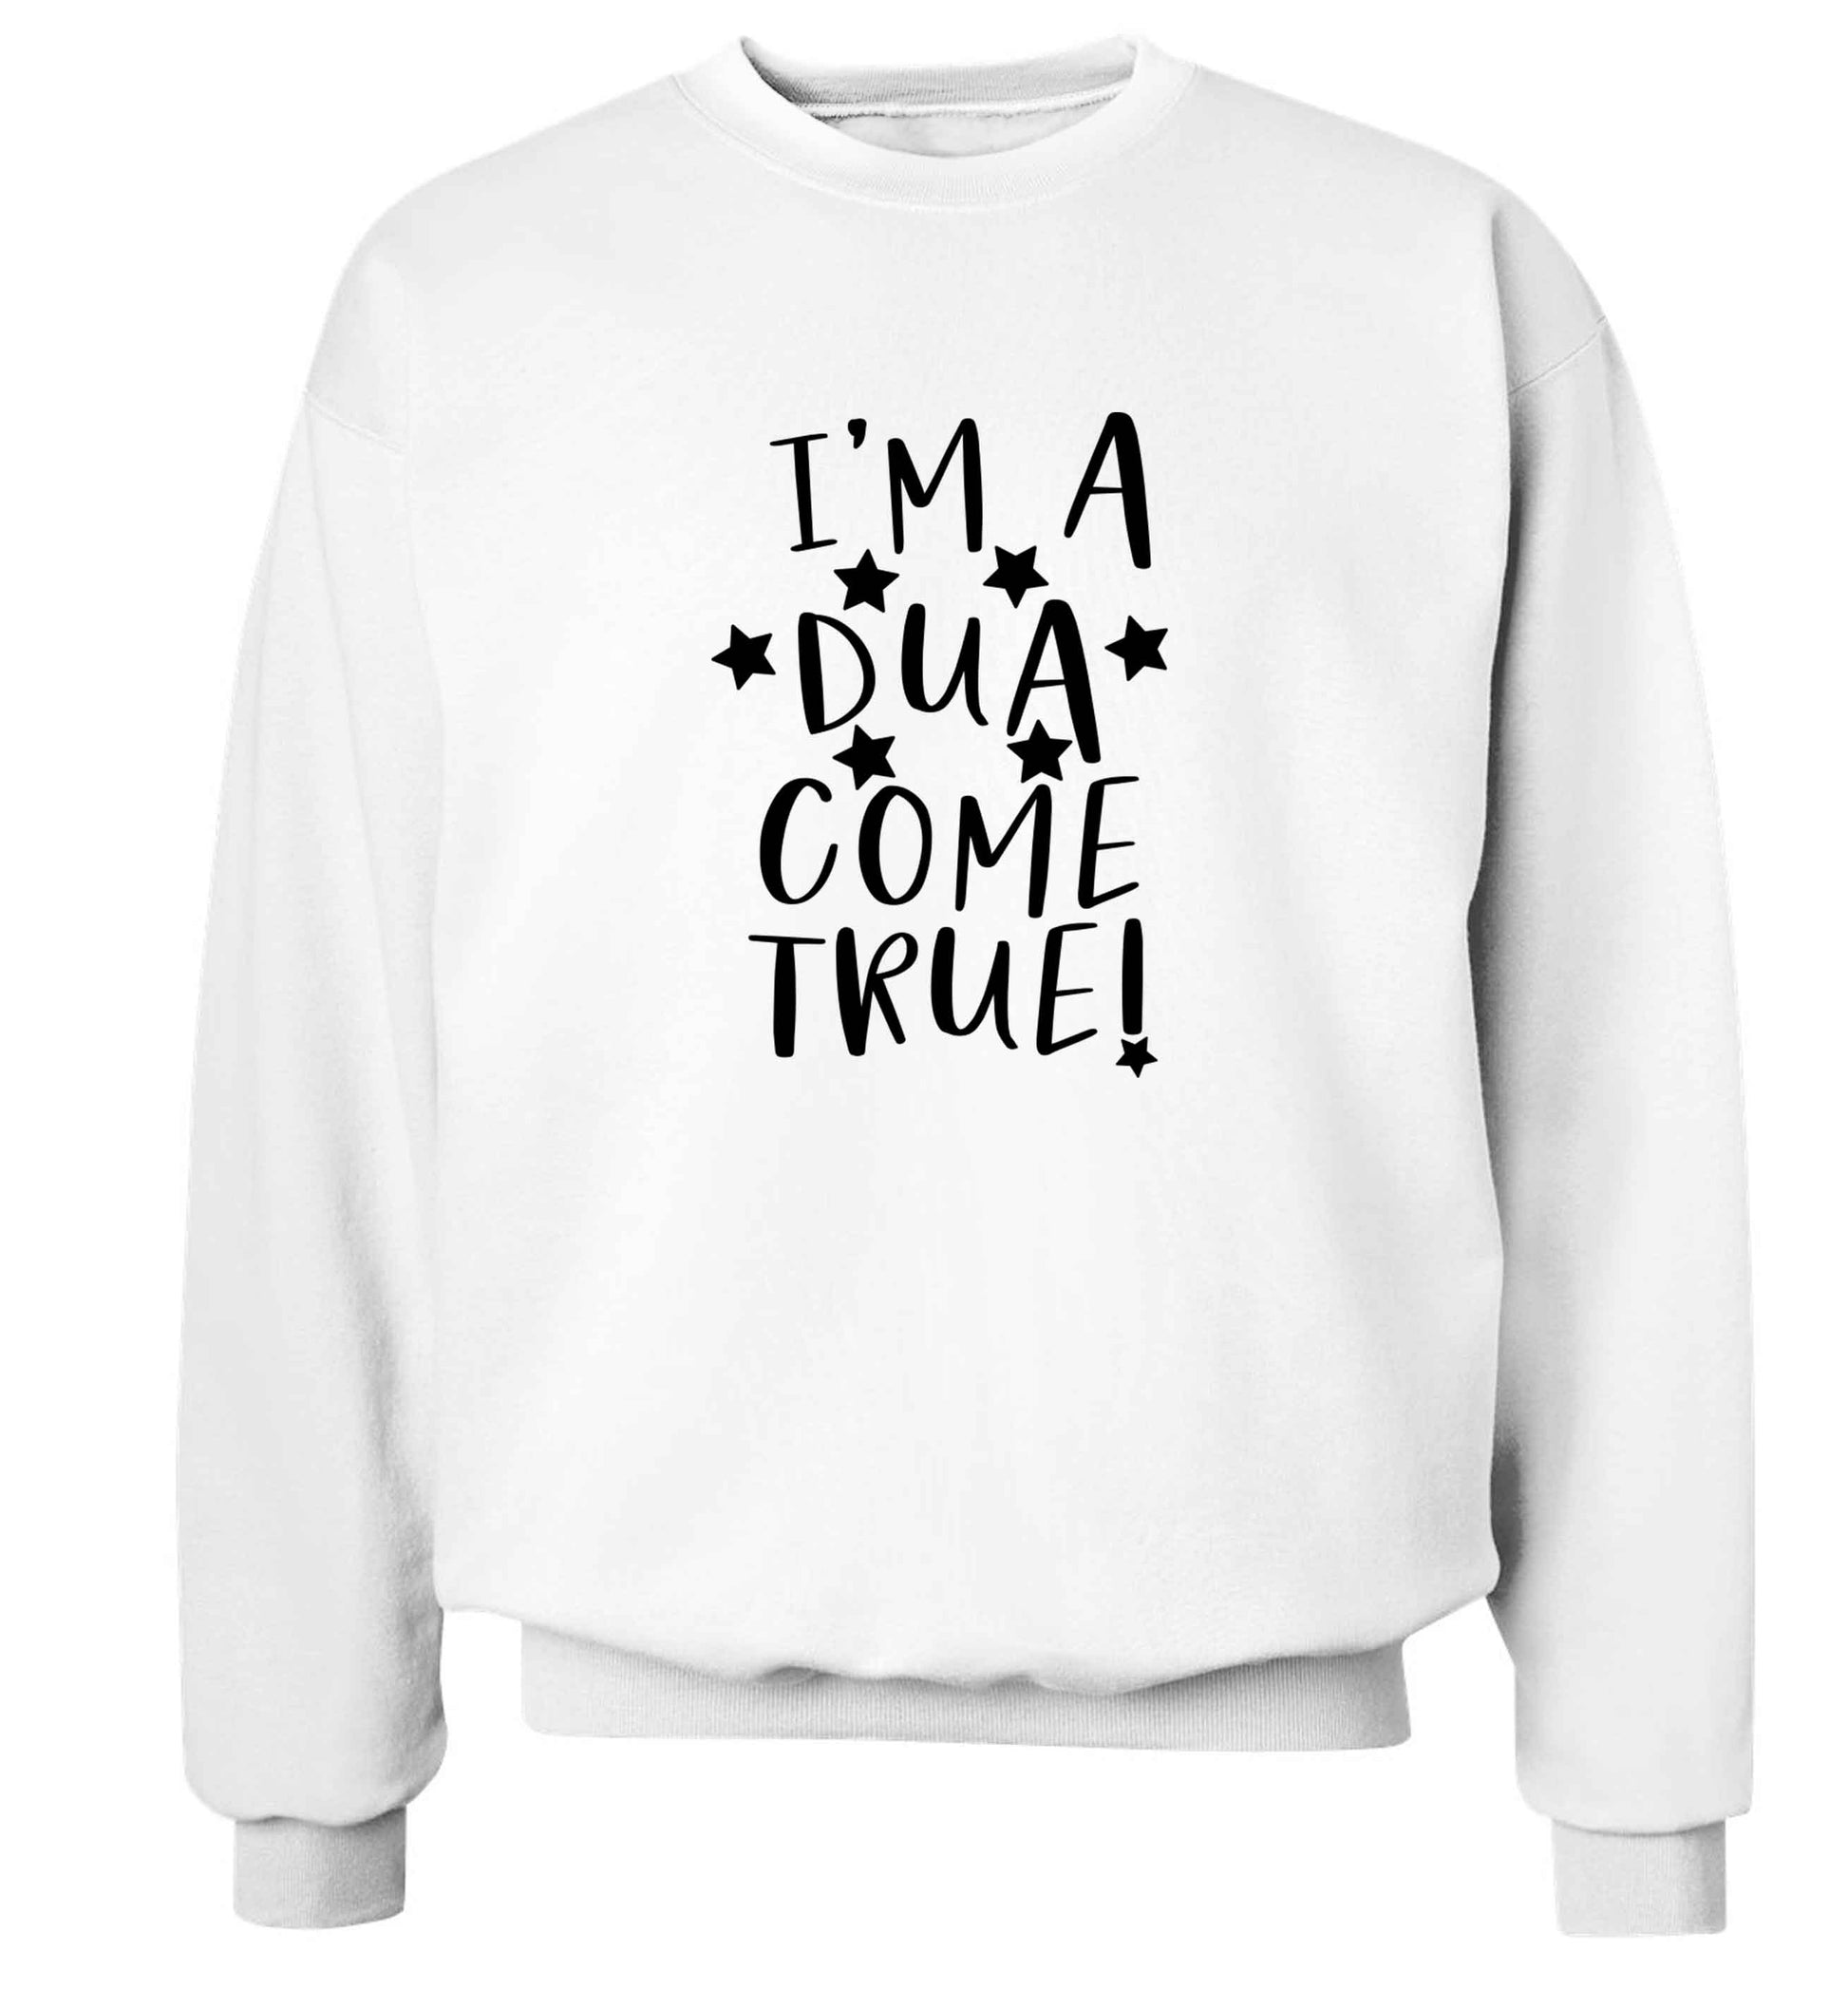 I'm a dua come true adult's unisex white sweater 2XL